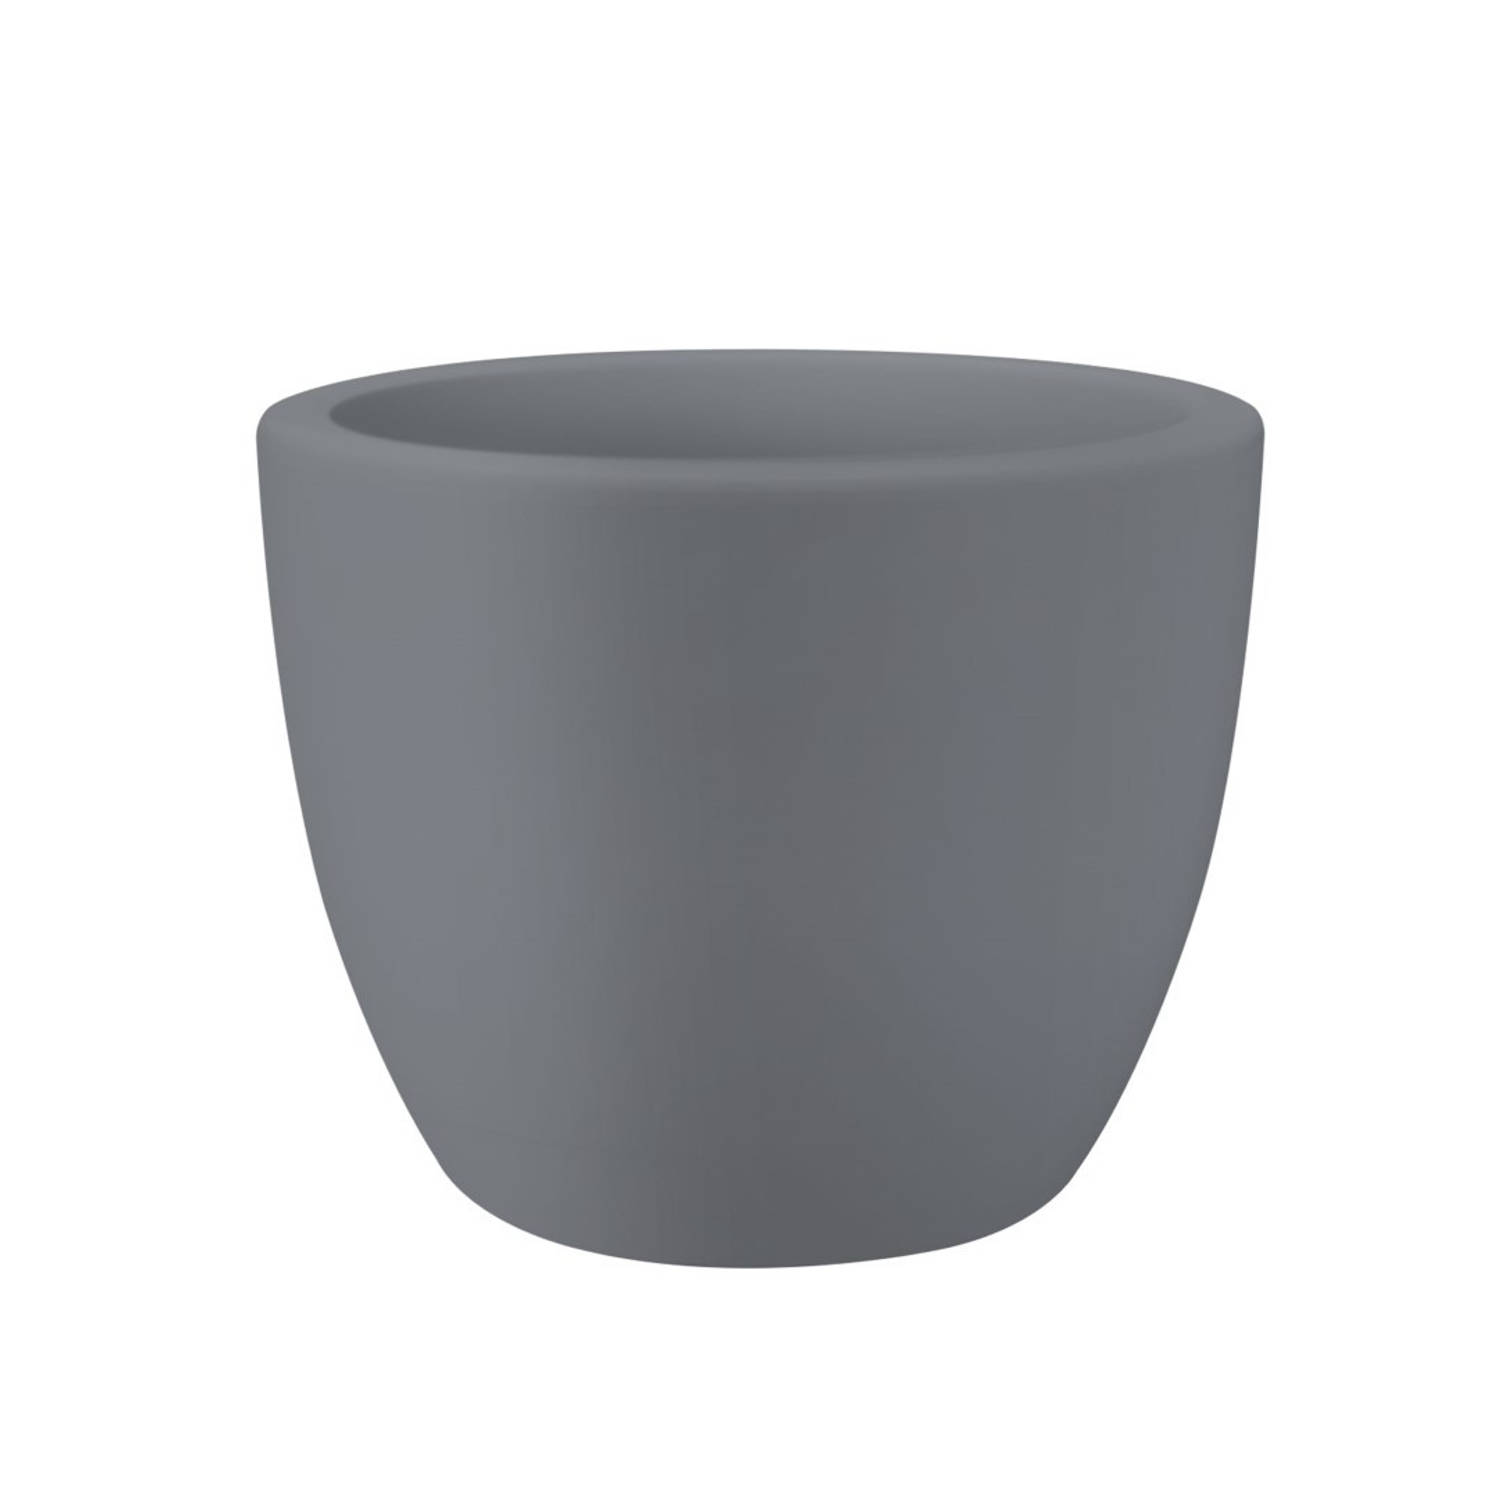 elho - Pure soft round 30 bloempot concrete binnen & buiten dia. 29 x h 23,4 cm